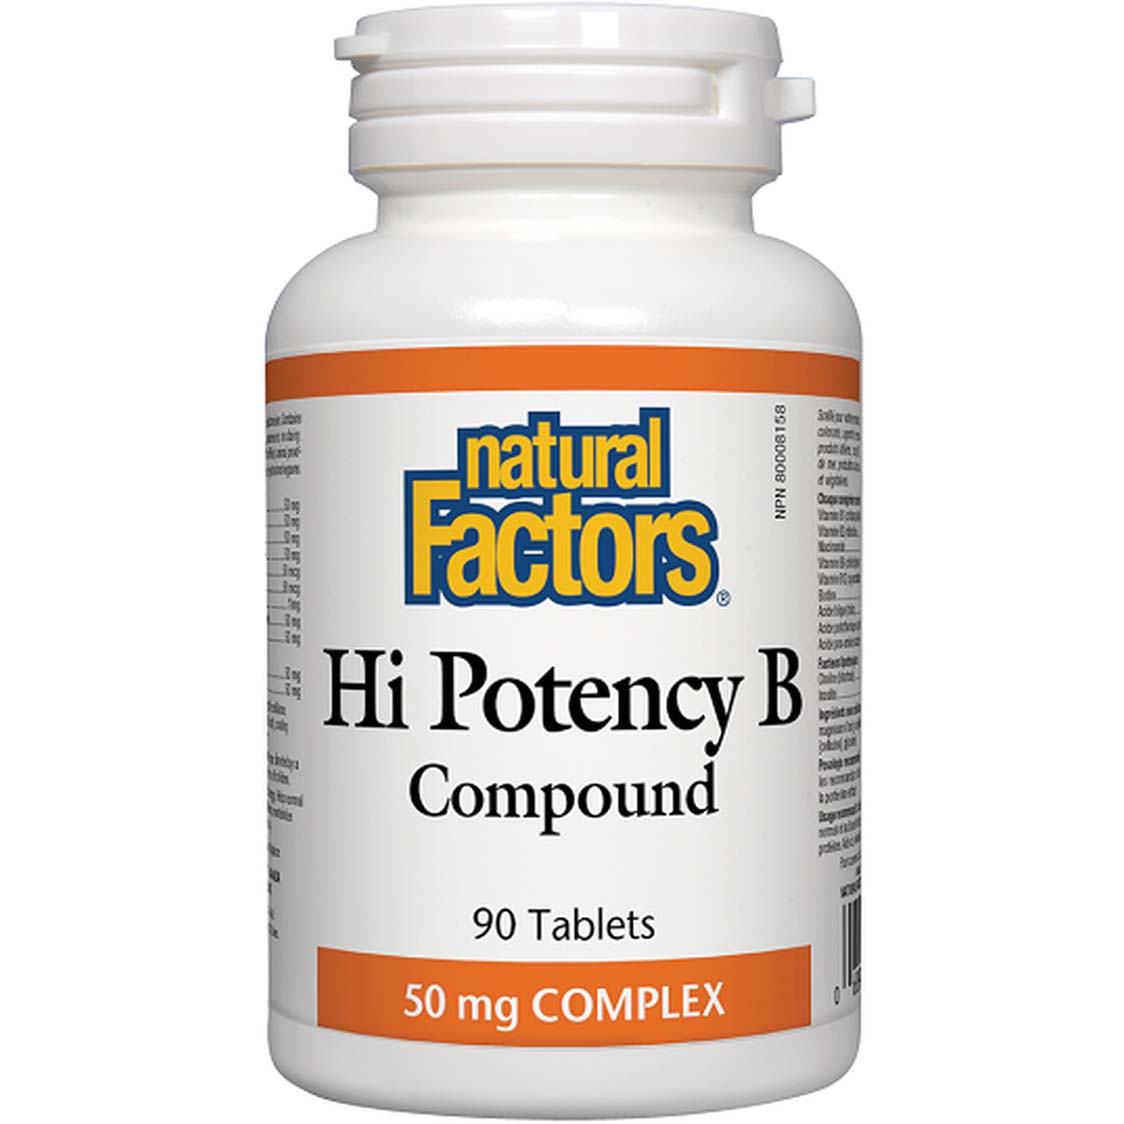 Natural Factors Hi Potency B Compound 90 Tablets 50 mg